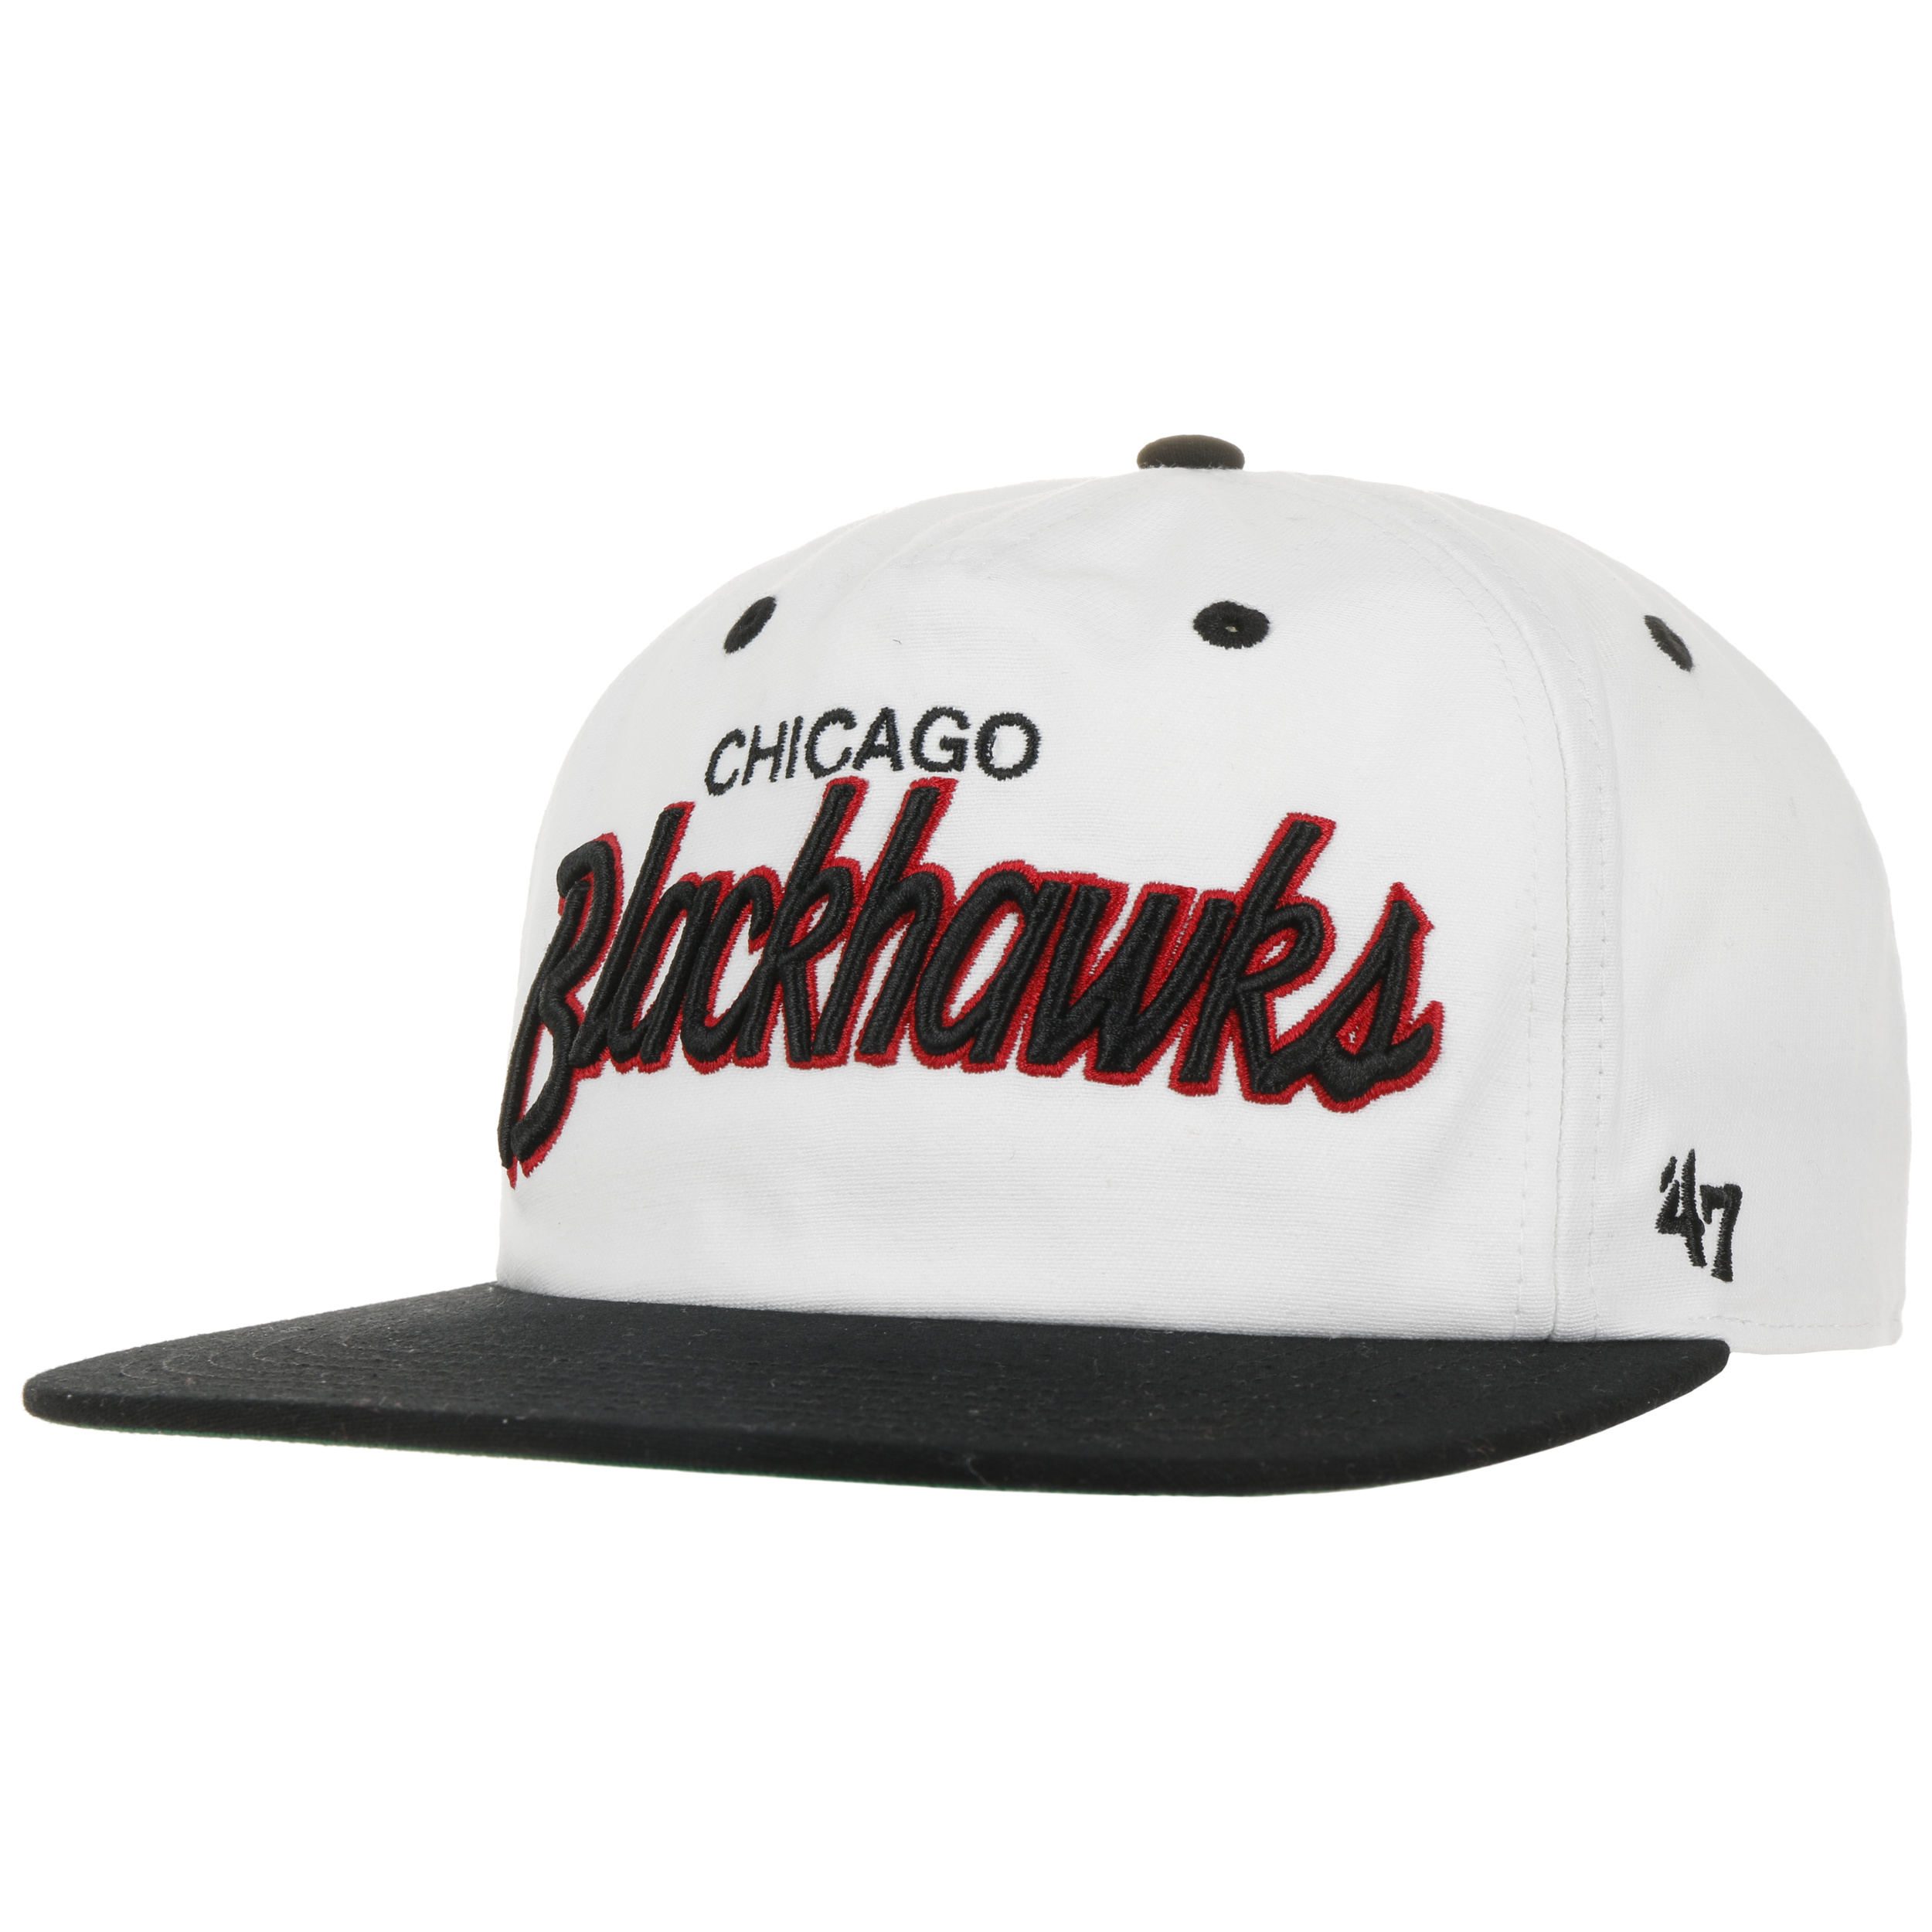 47 Brand Snapback Cap Baseball Hat NHL flat peak All Styles